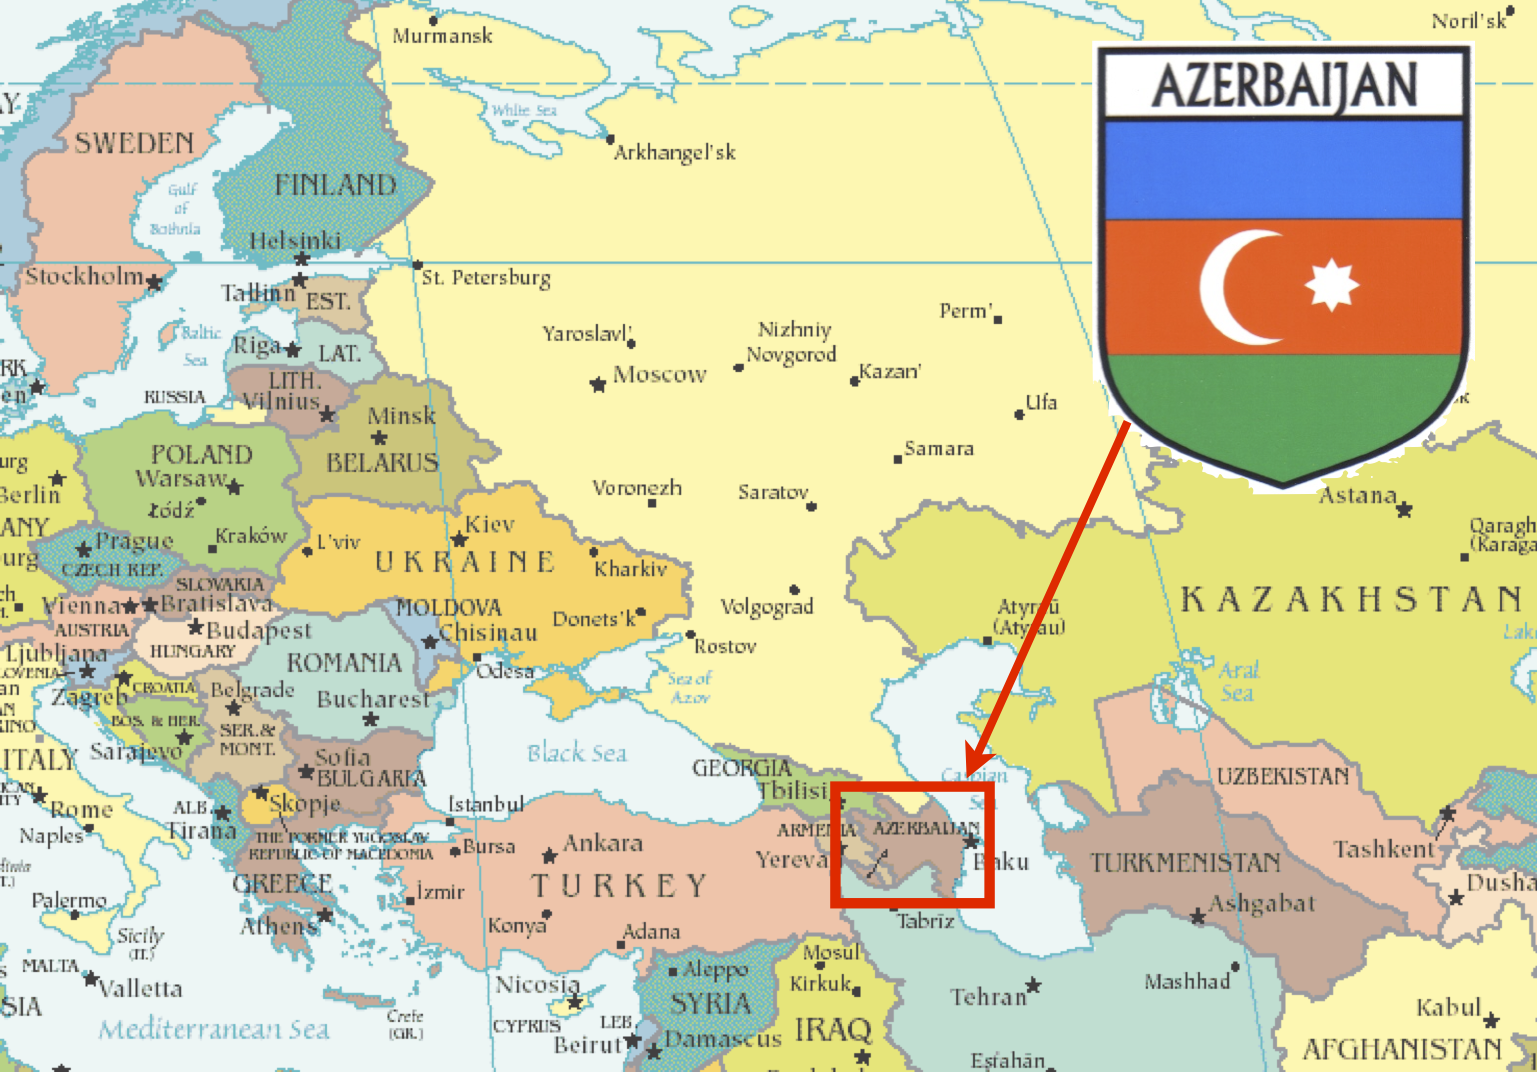 MARXIST: Azerbaijan